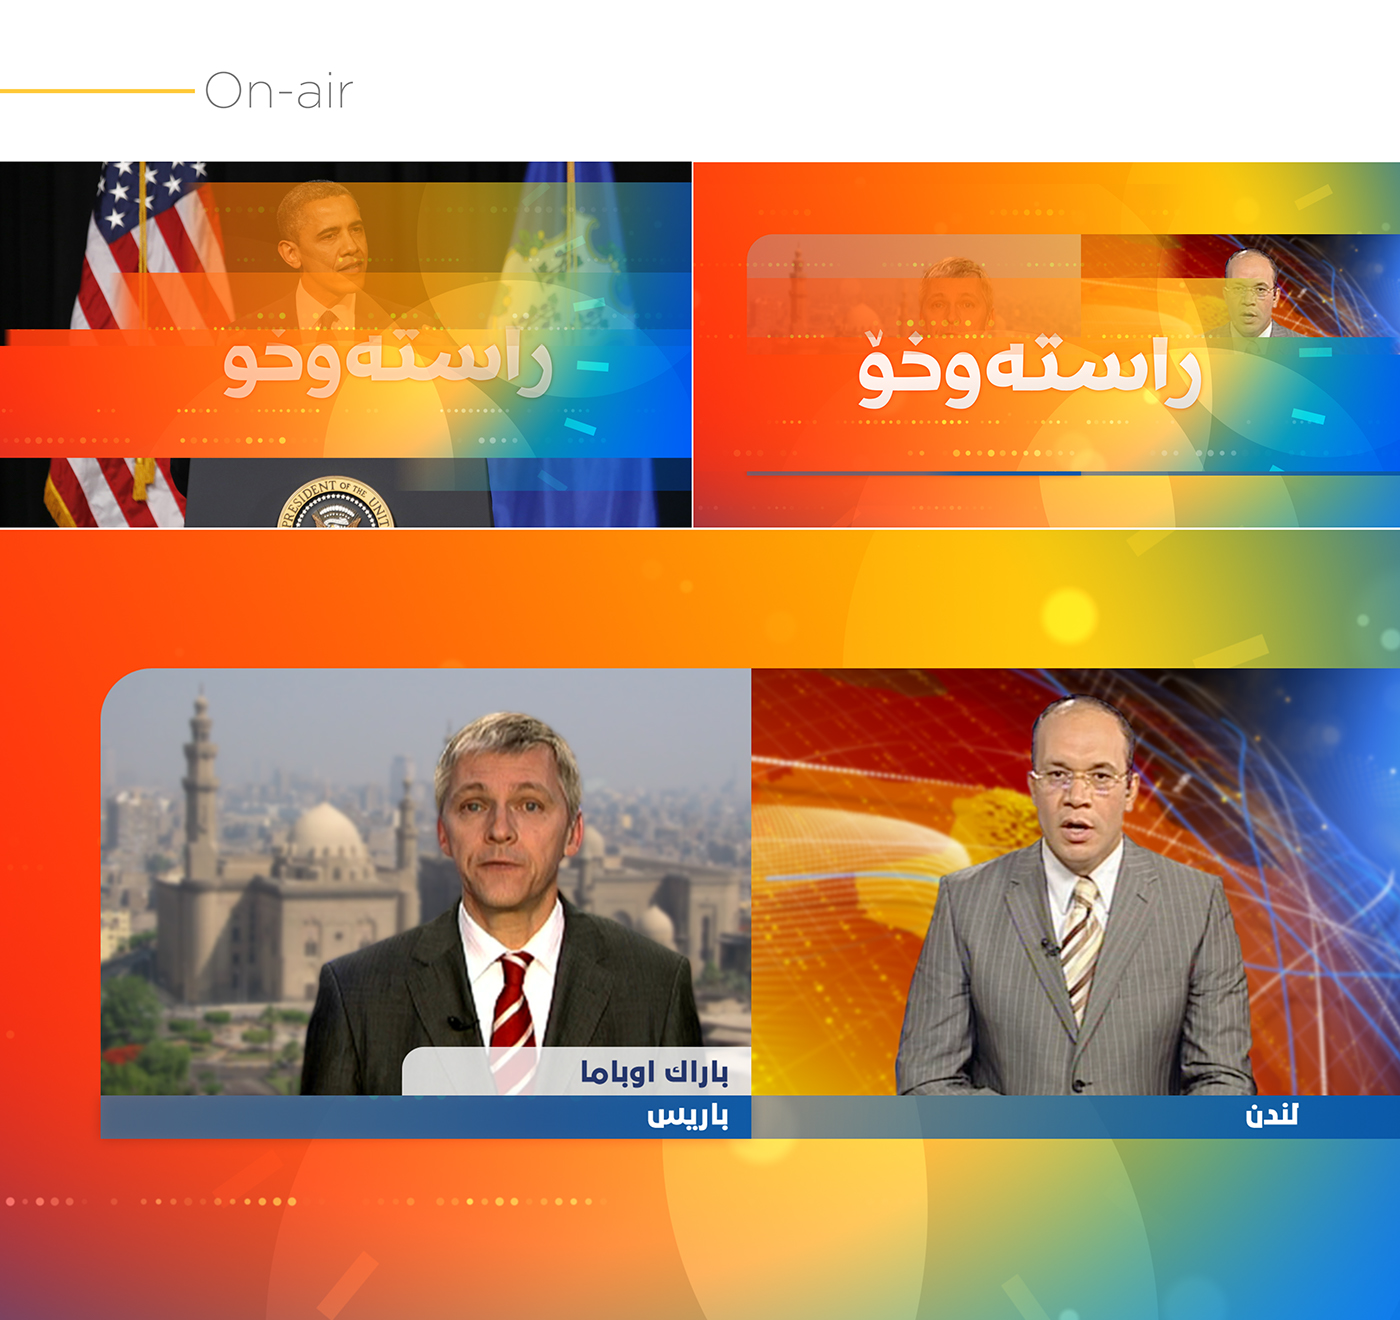 broadcastdesign opener news MORNING Show sport business weather economy Aljazeera BBC SKY